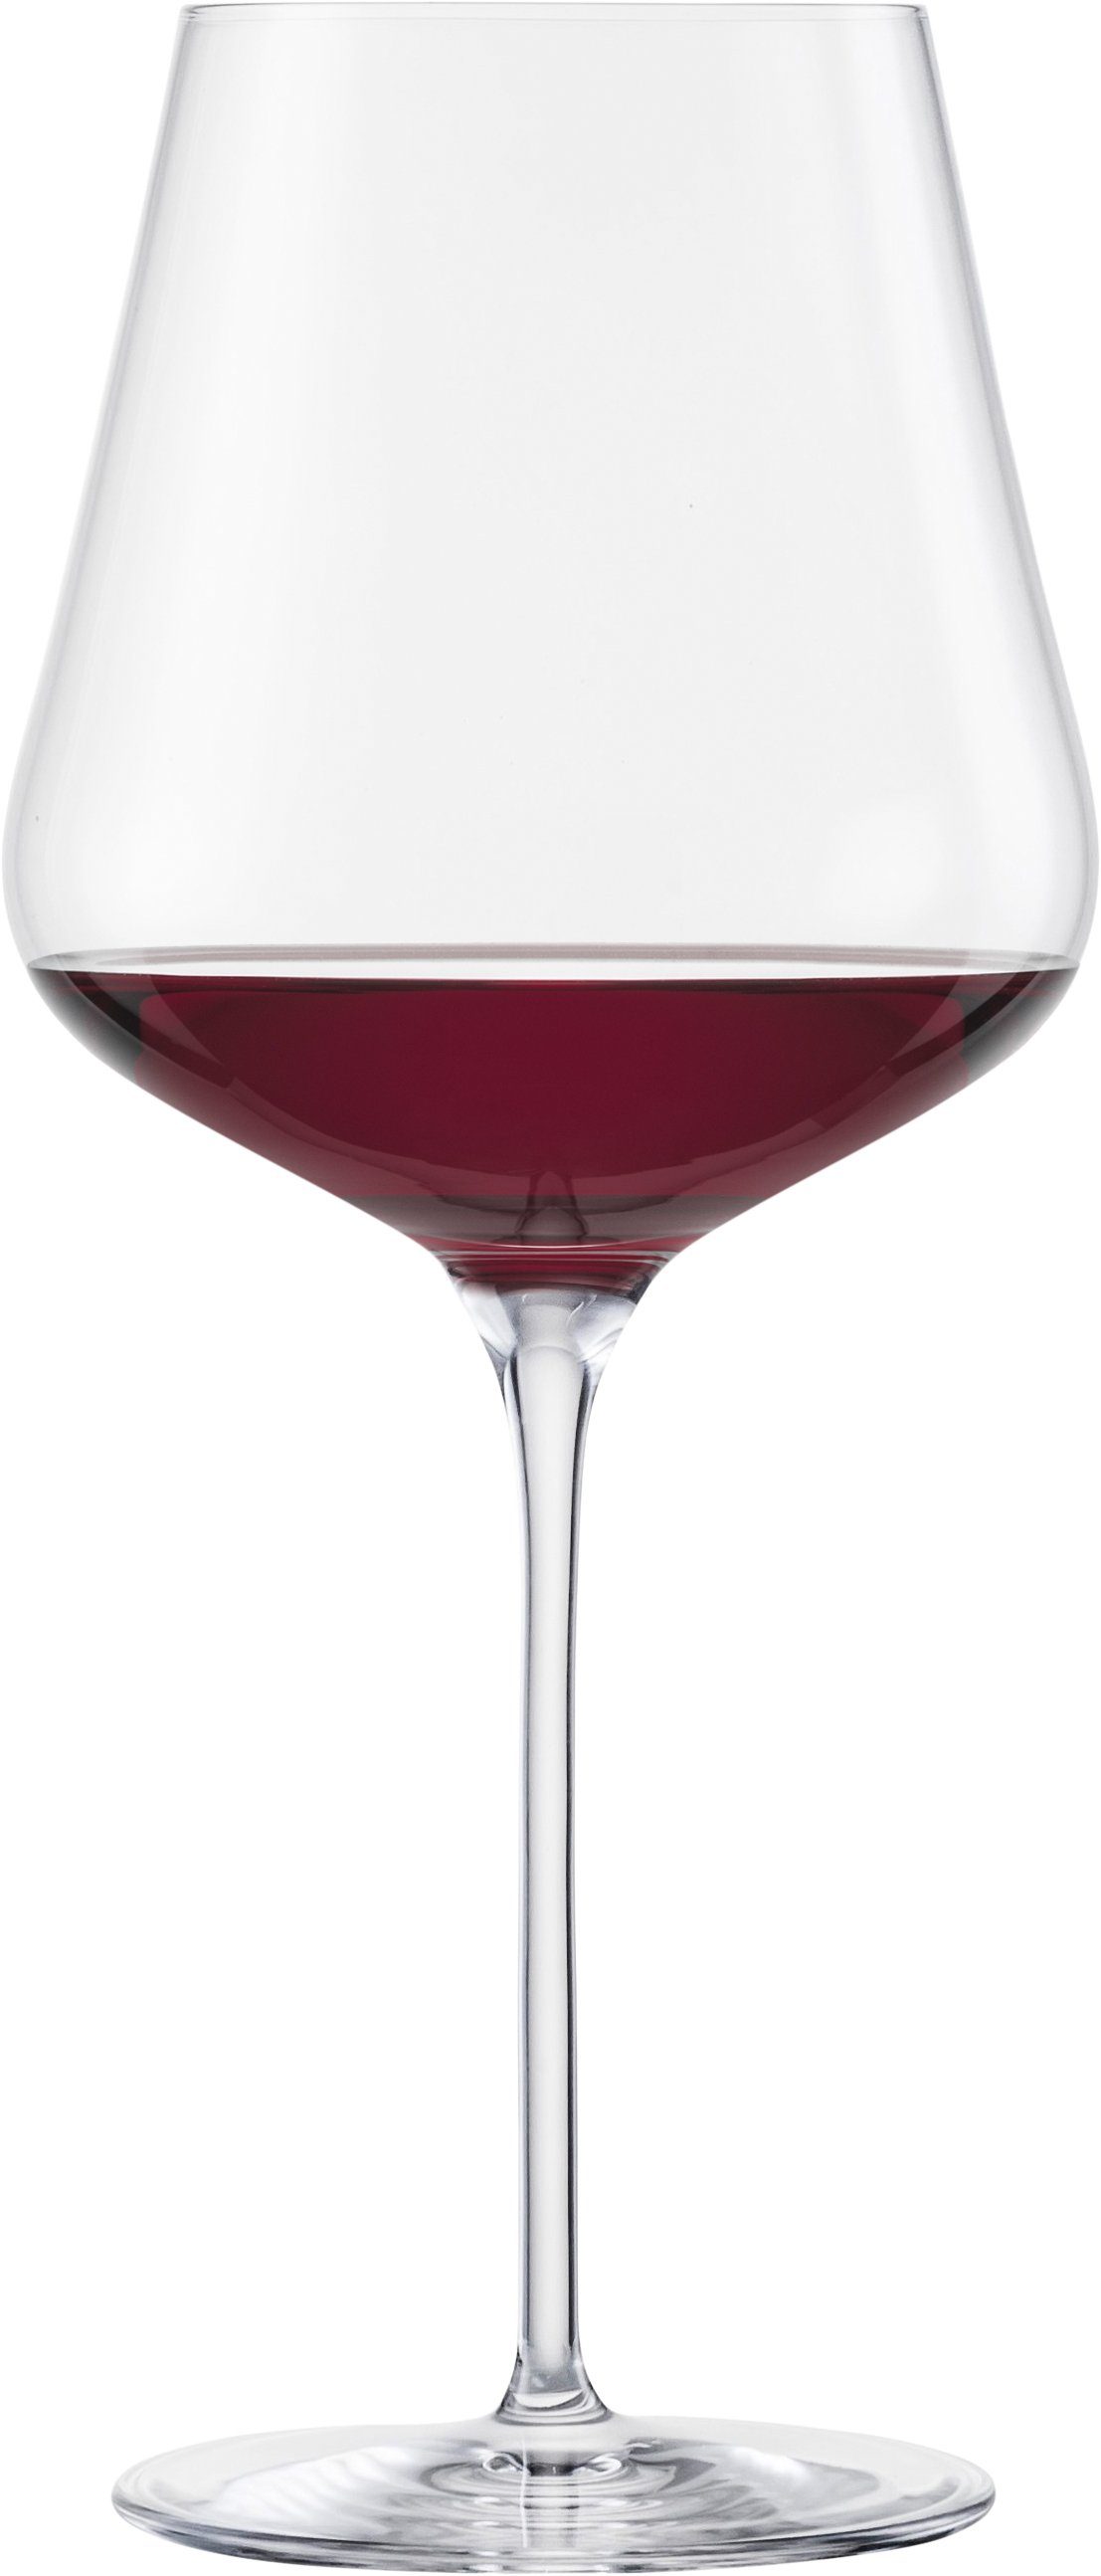 4-teilig Eisch ml, bleifrei, Kristallglas, (Burgunderglas), SkySensisPlus, Rotweinglas 710